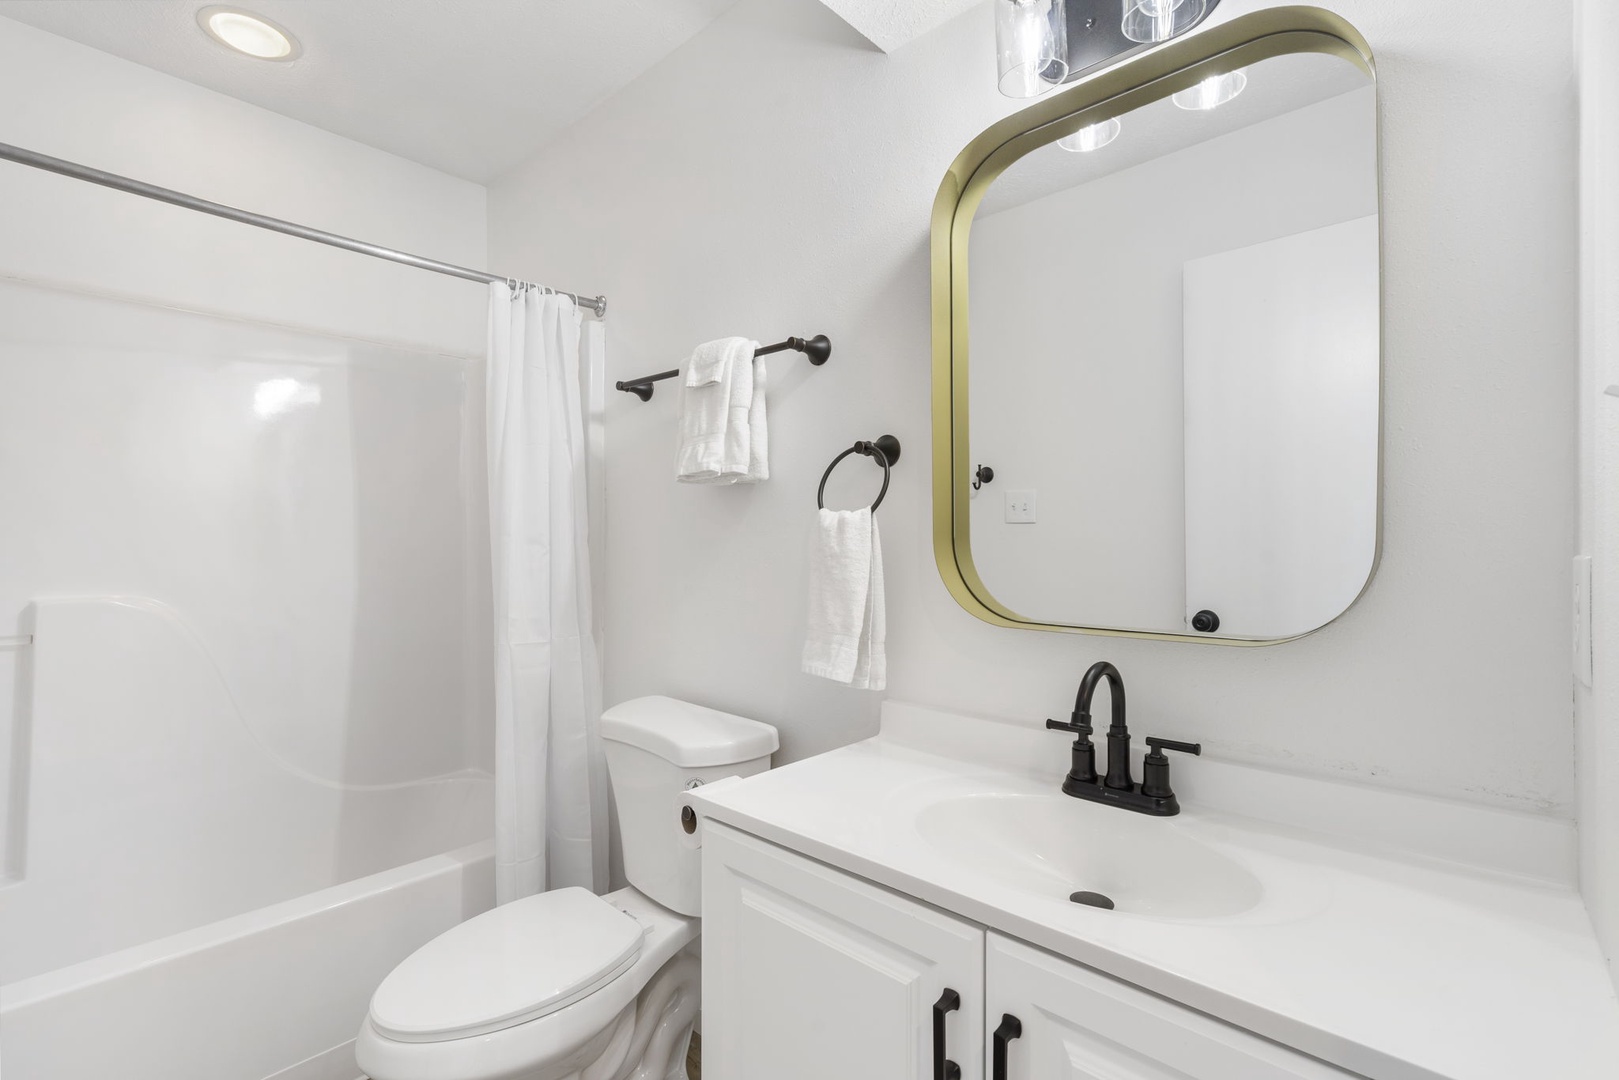 Unit 41: The 2nd floor hall bathroom offers a single vanity & shower/tub combo